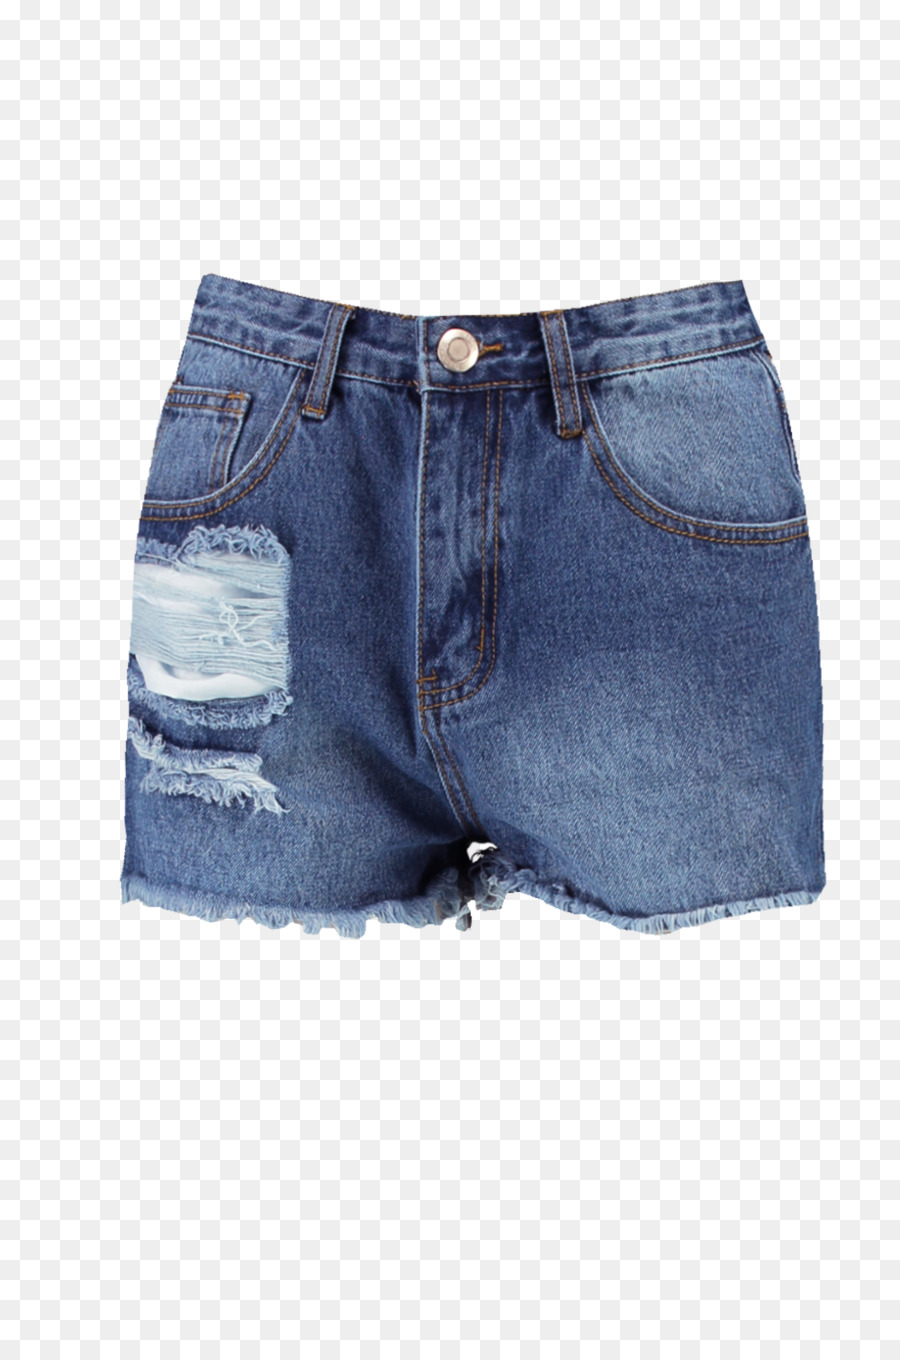 Bermuda quần Jeans - quần jean